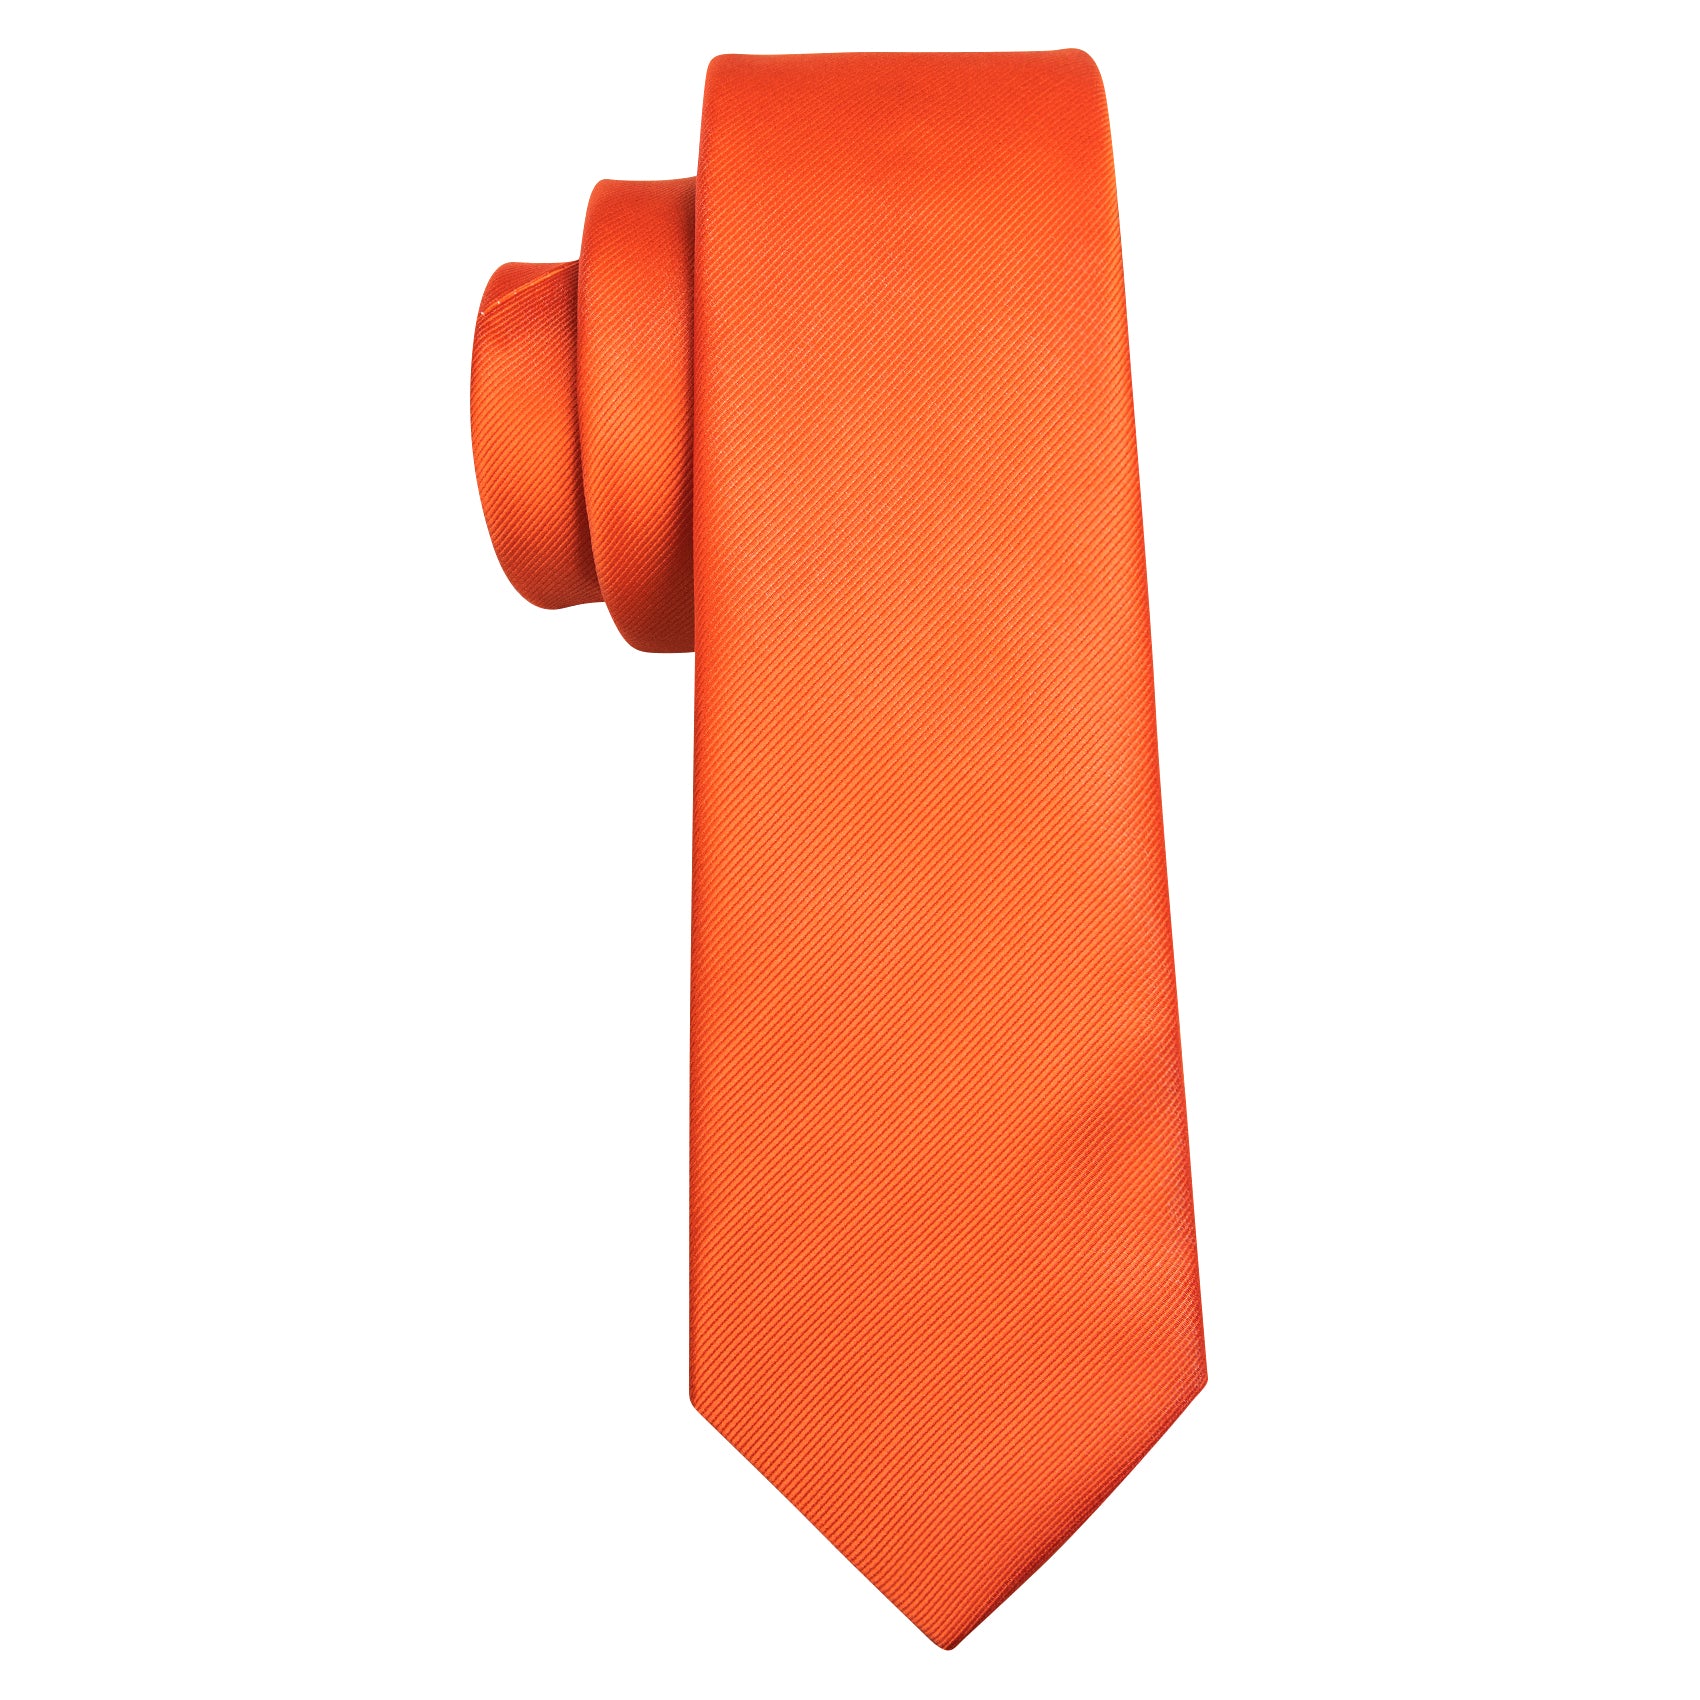 Barry.wang Orange Tie Woven Solid Silk Tie Pocket Square Cufflinks Set